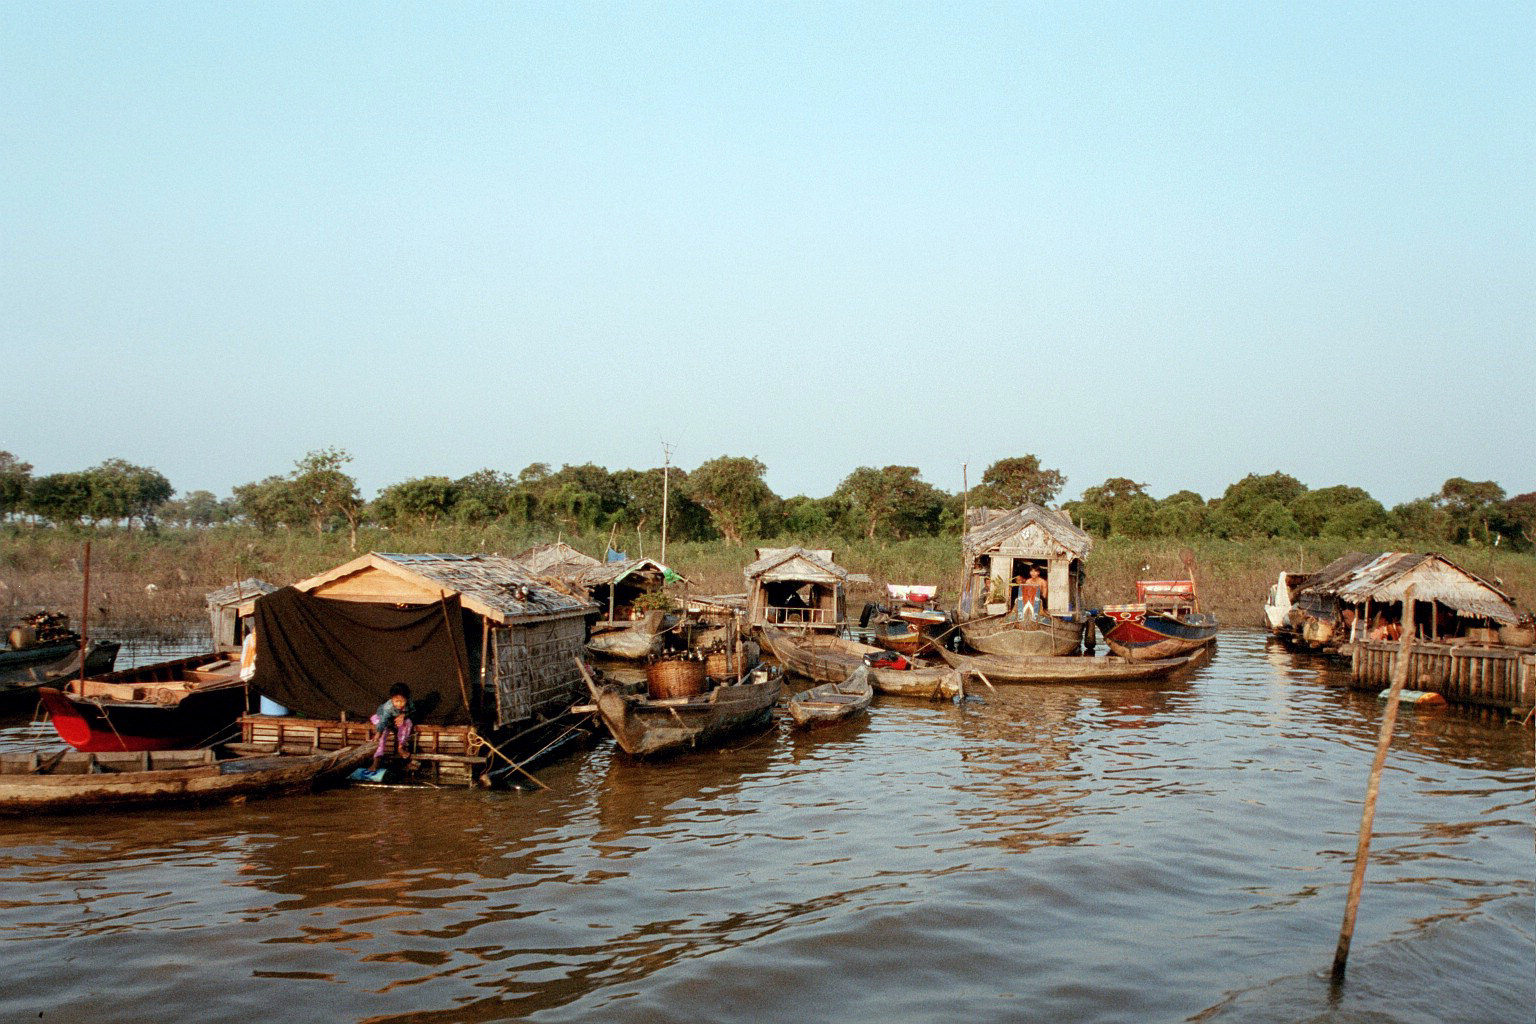 People living on lake - Cambodia 2003